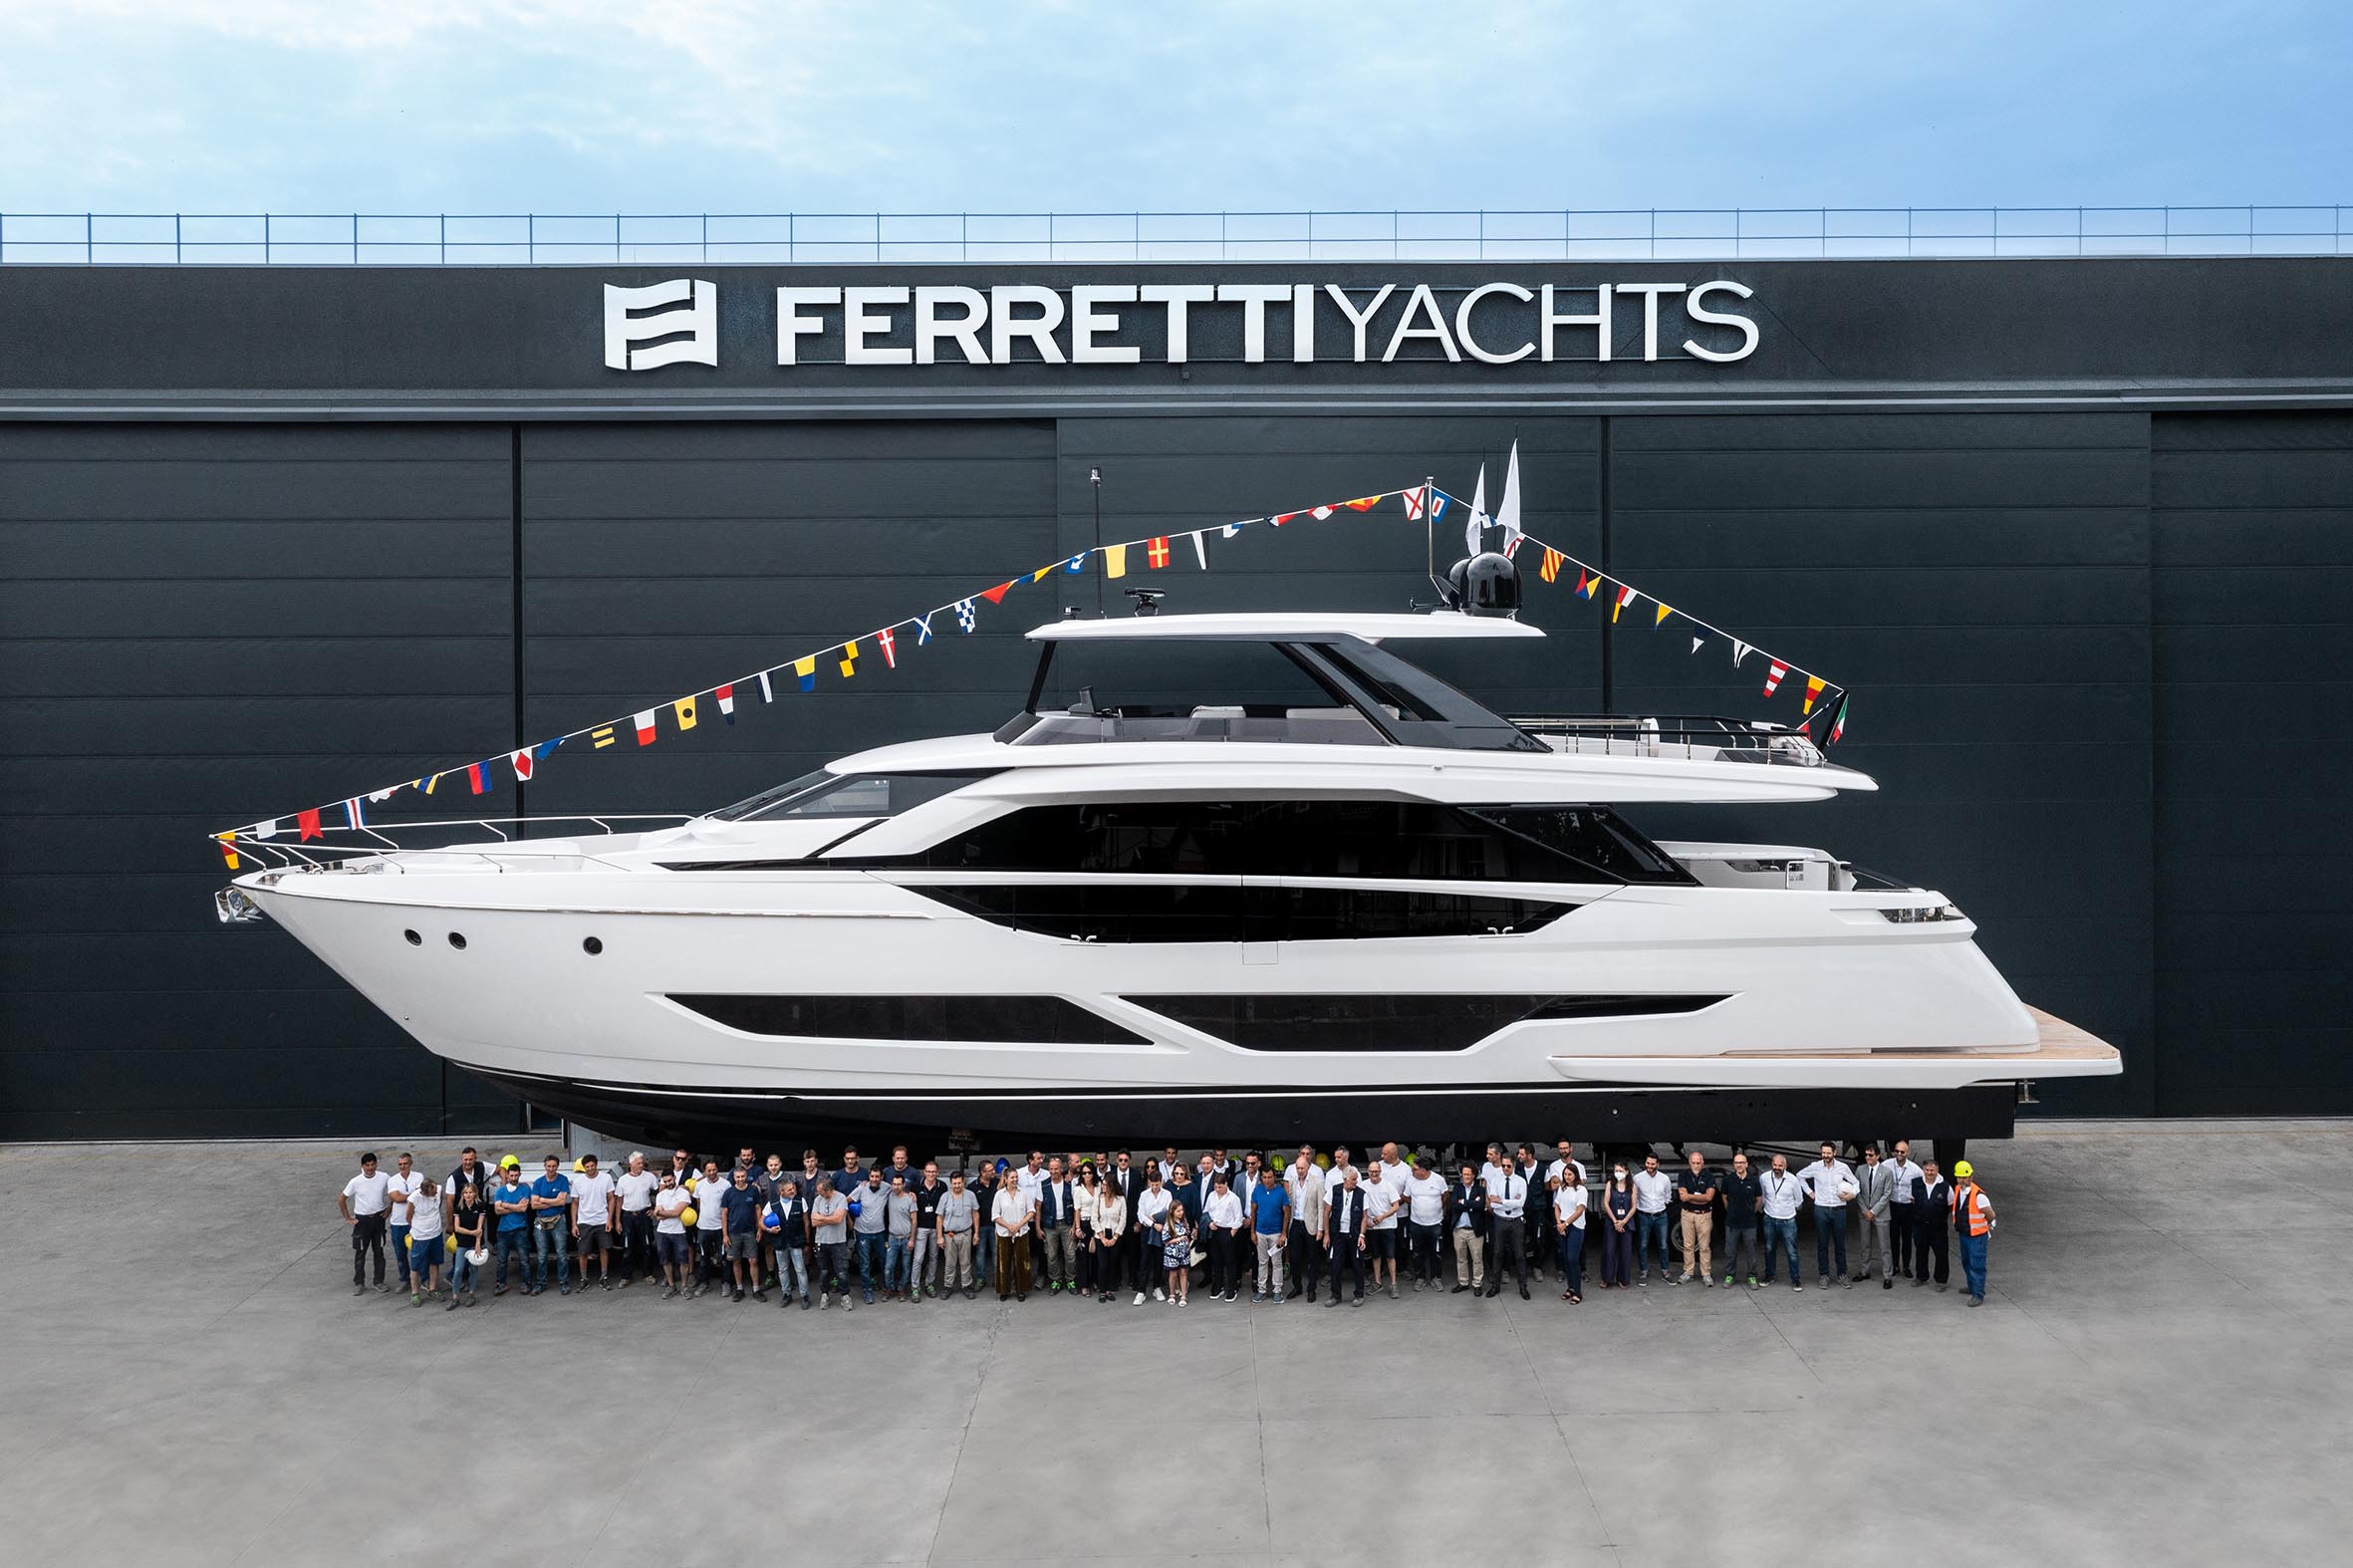 ferretti yacht brands